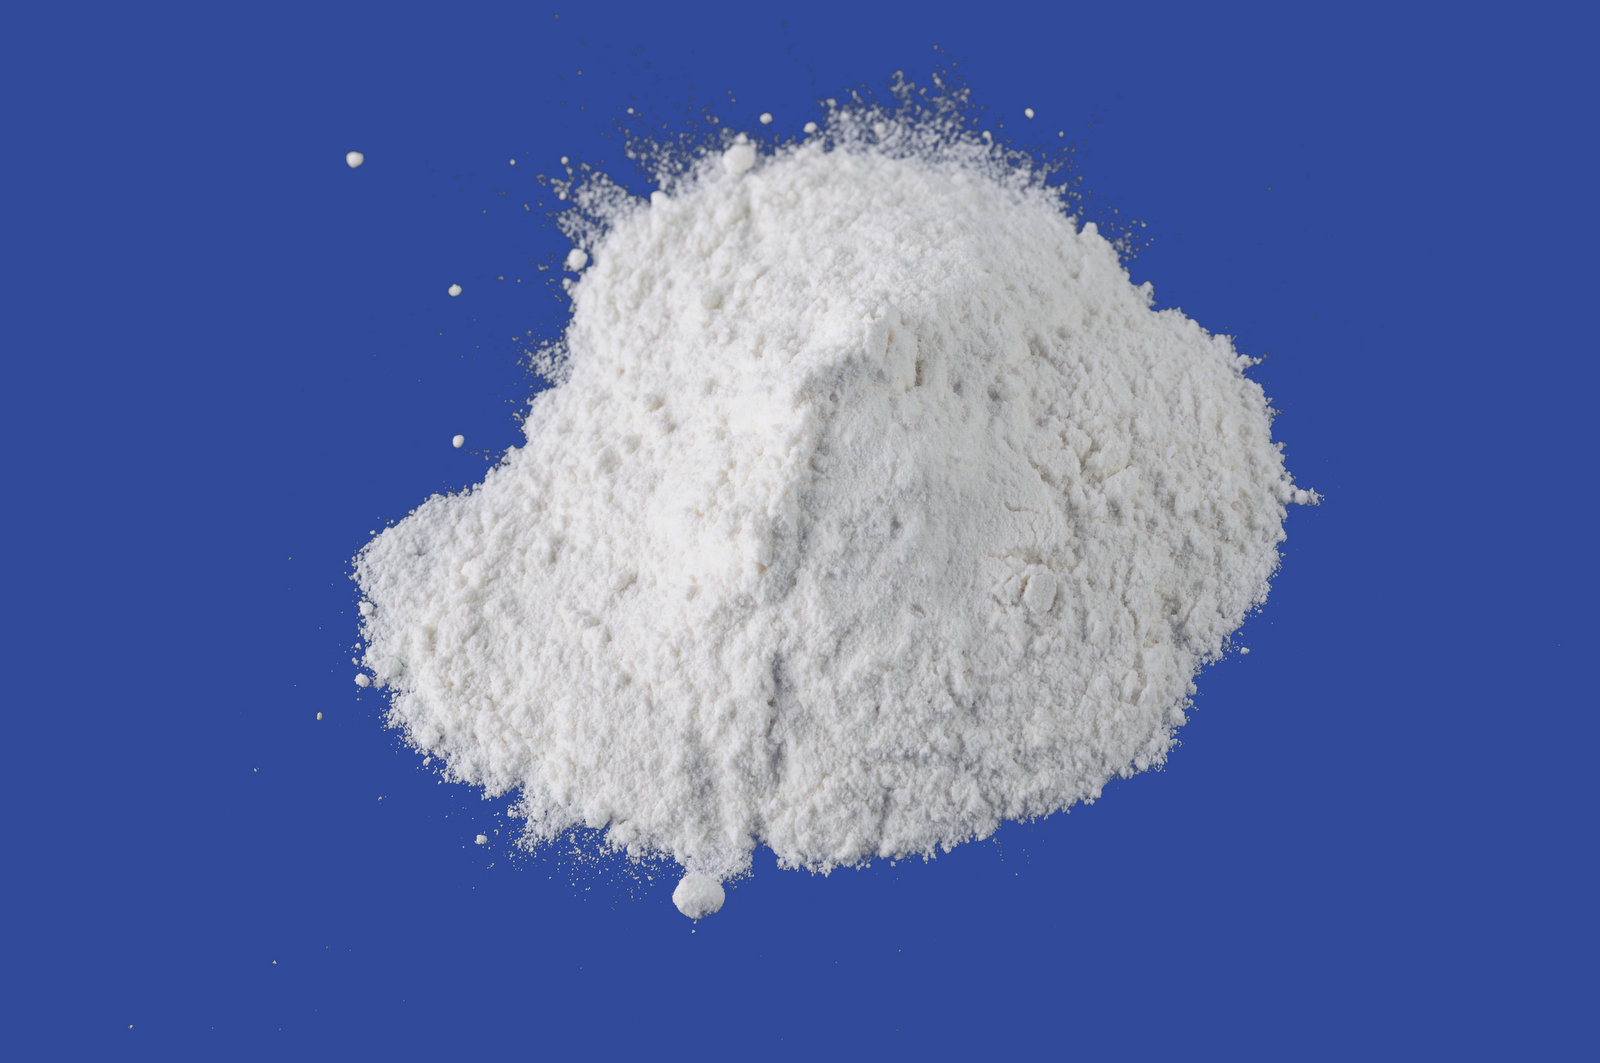 双氯芬酸钠,Diclofenac sodium